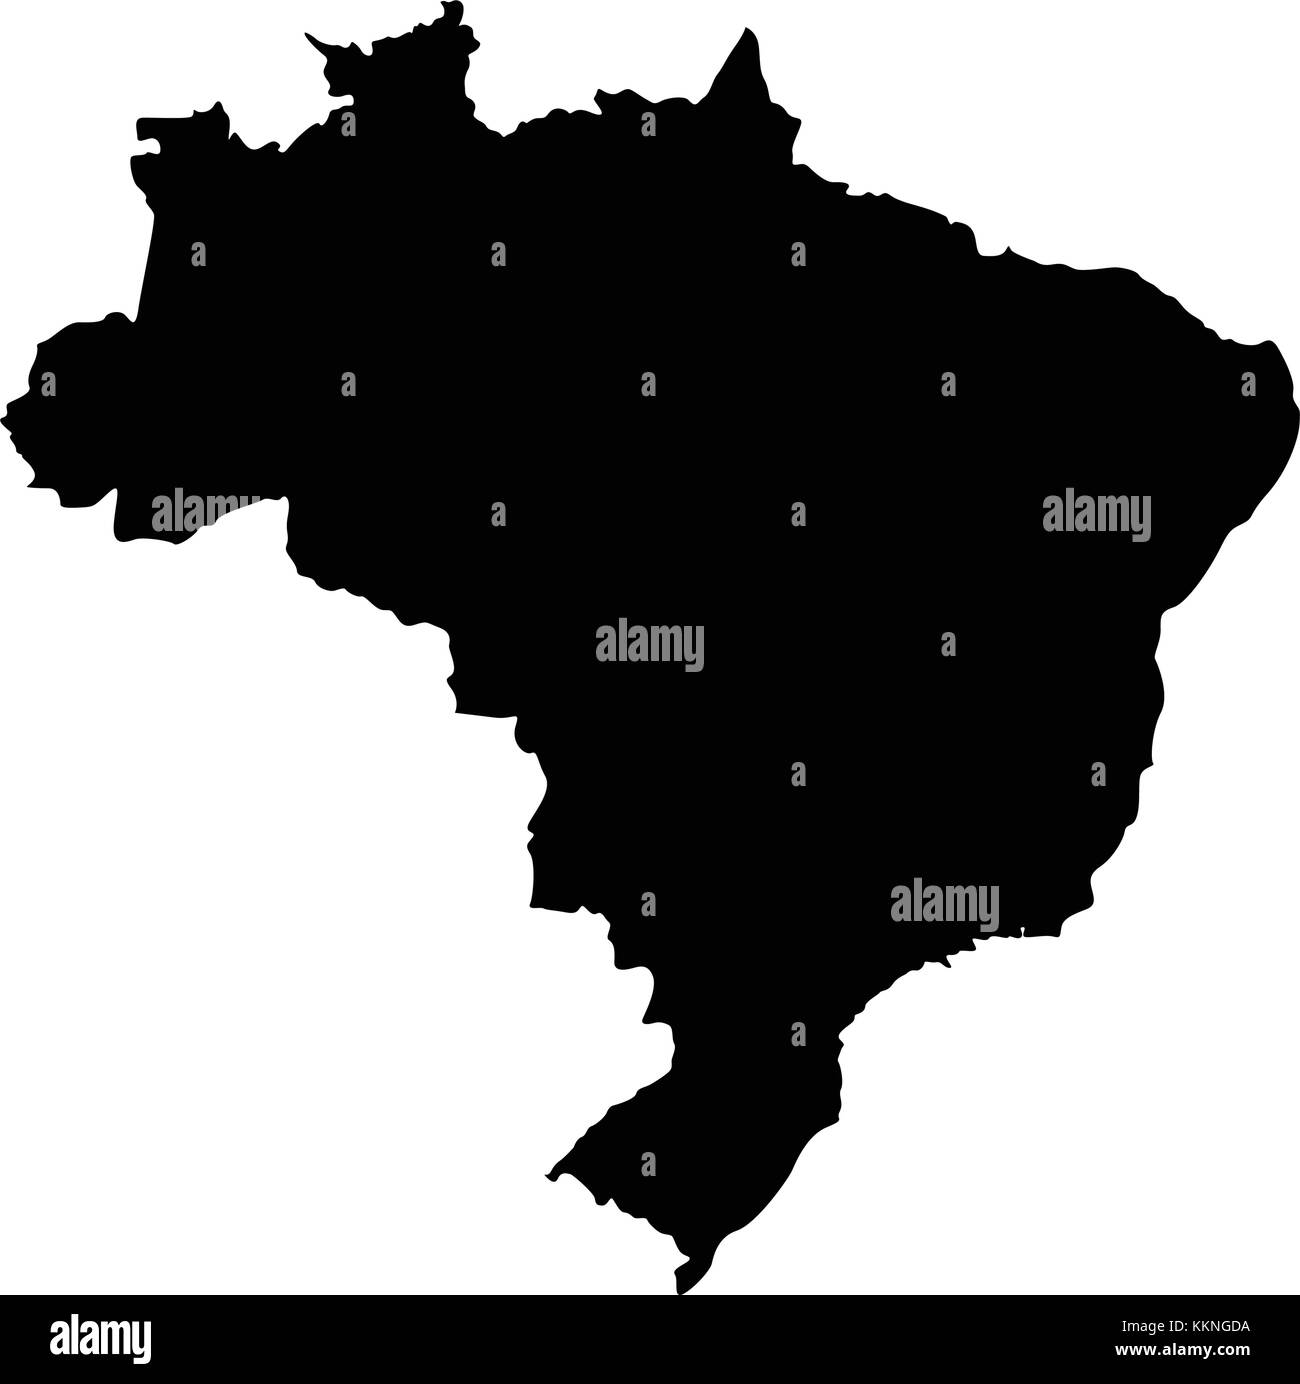 Karte von Brasilien Stock Vektor